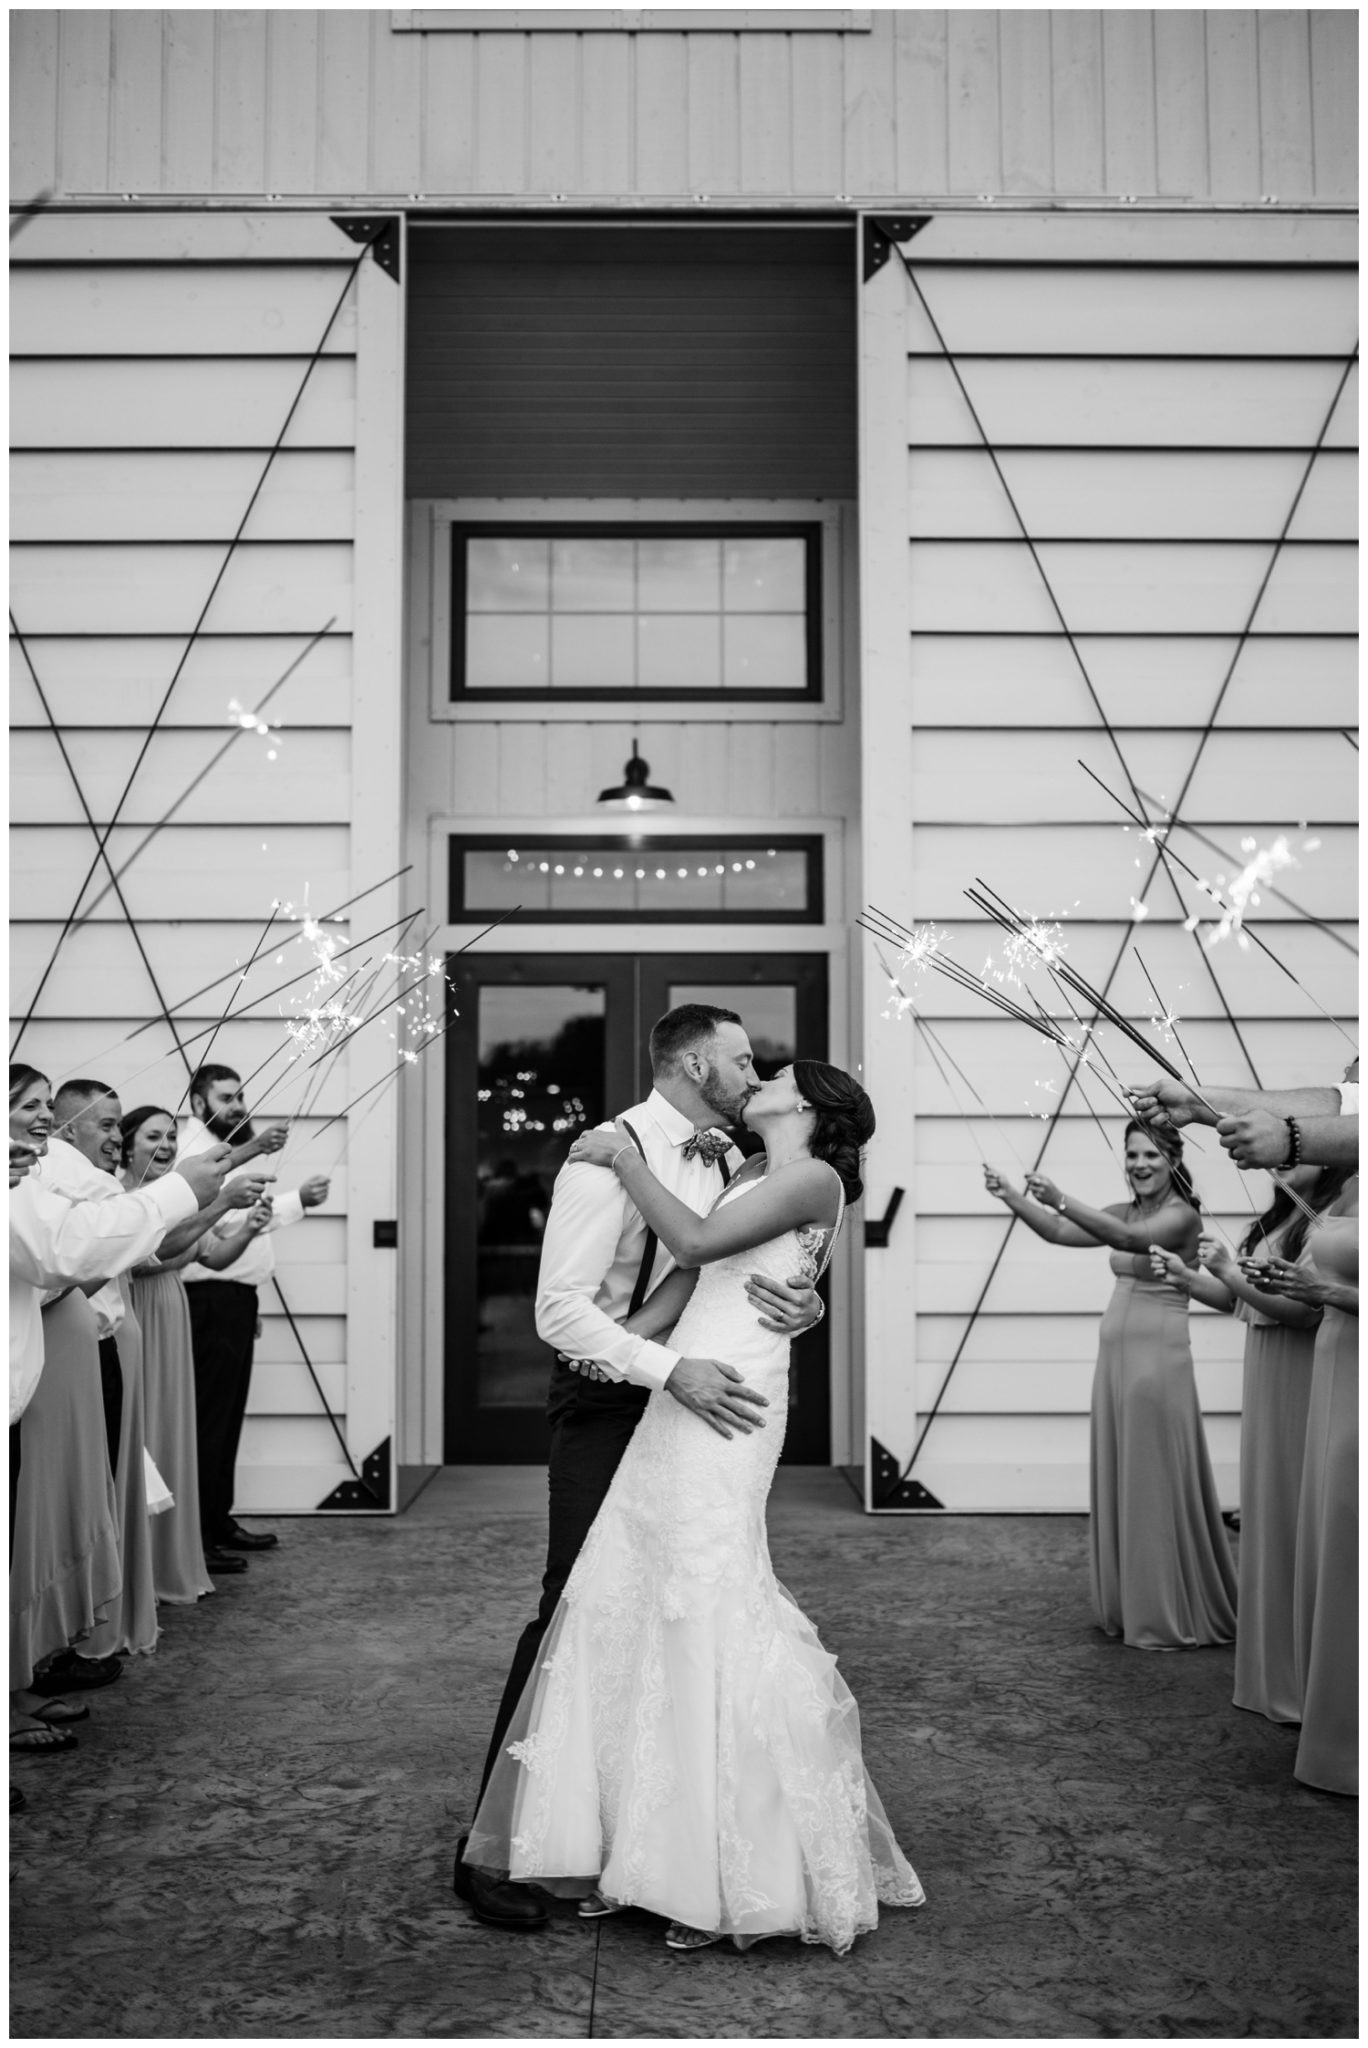 Cook Forest Wedding,Hannah Bryerton Photography,NWPA Weddings,Northwestern Pennslyvania Weddings,Tuck'd Inn Farm Wedding,WNY Photographer,White Barn Event,